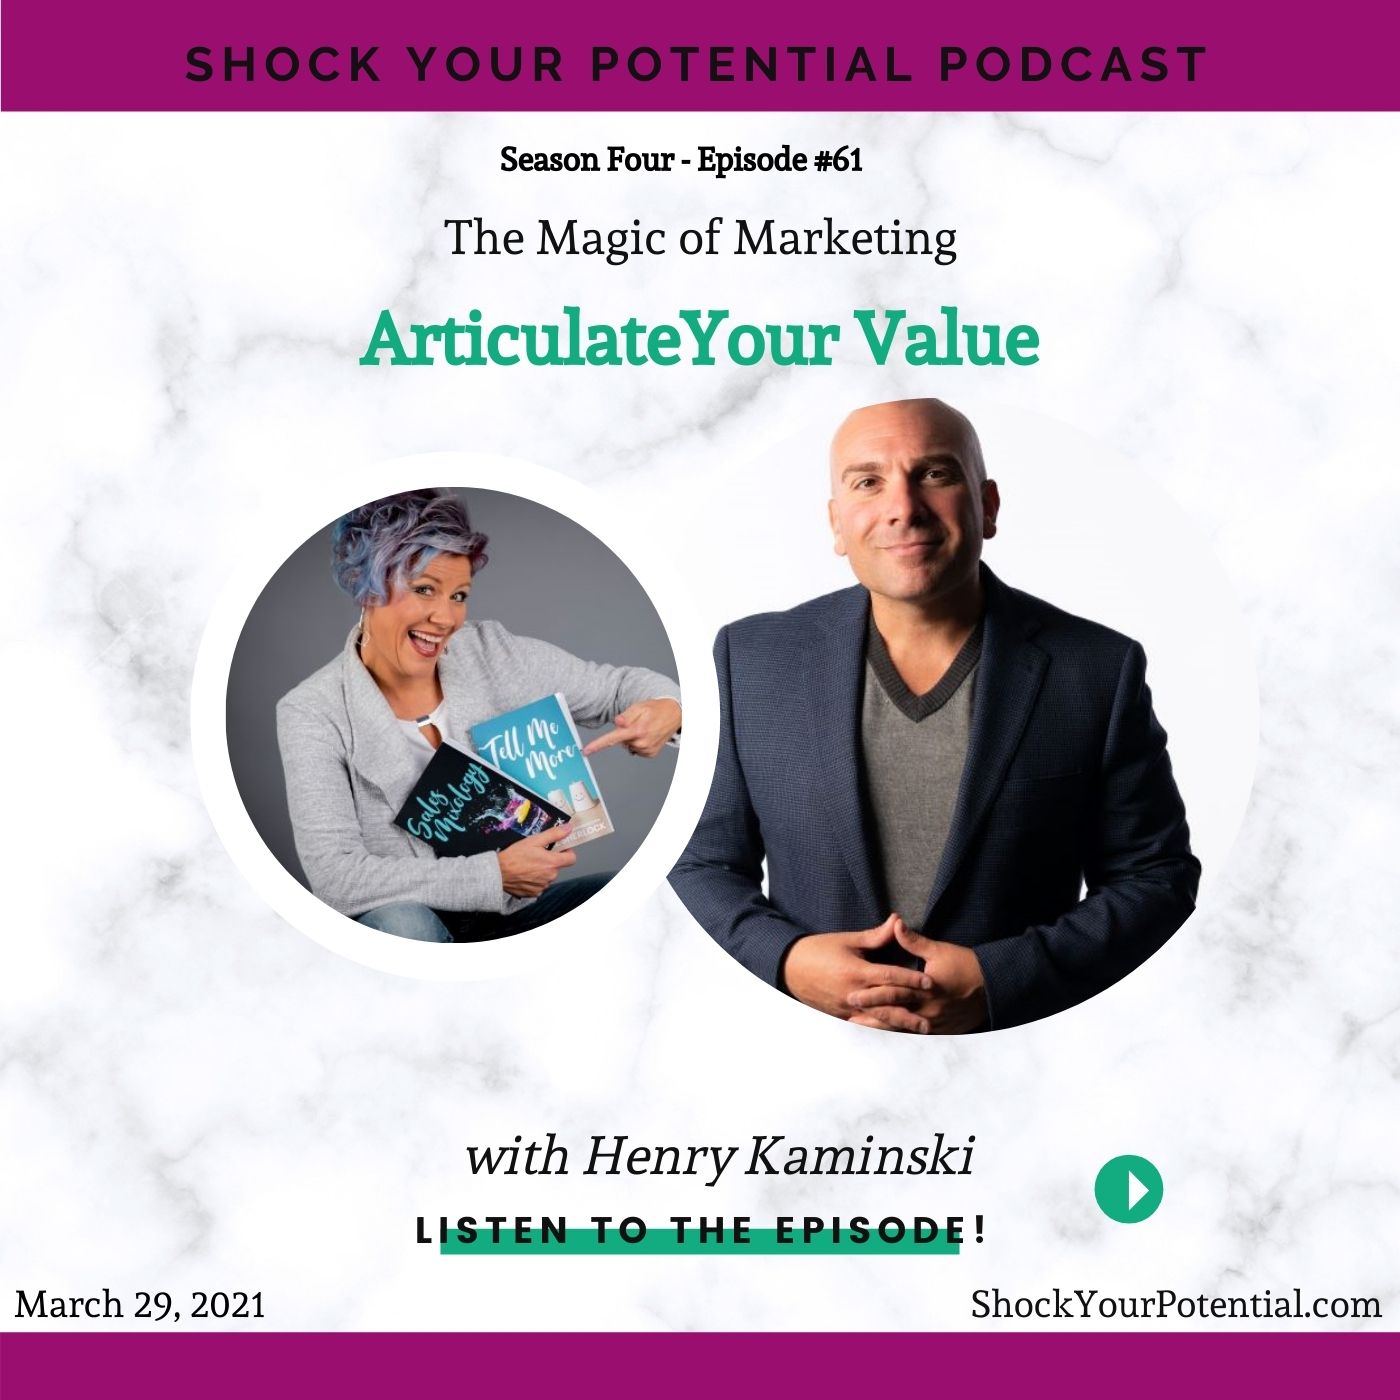 ArticulateYour Value – Henry Kaminski